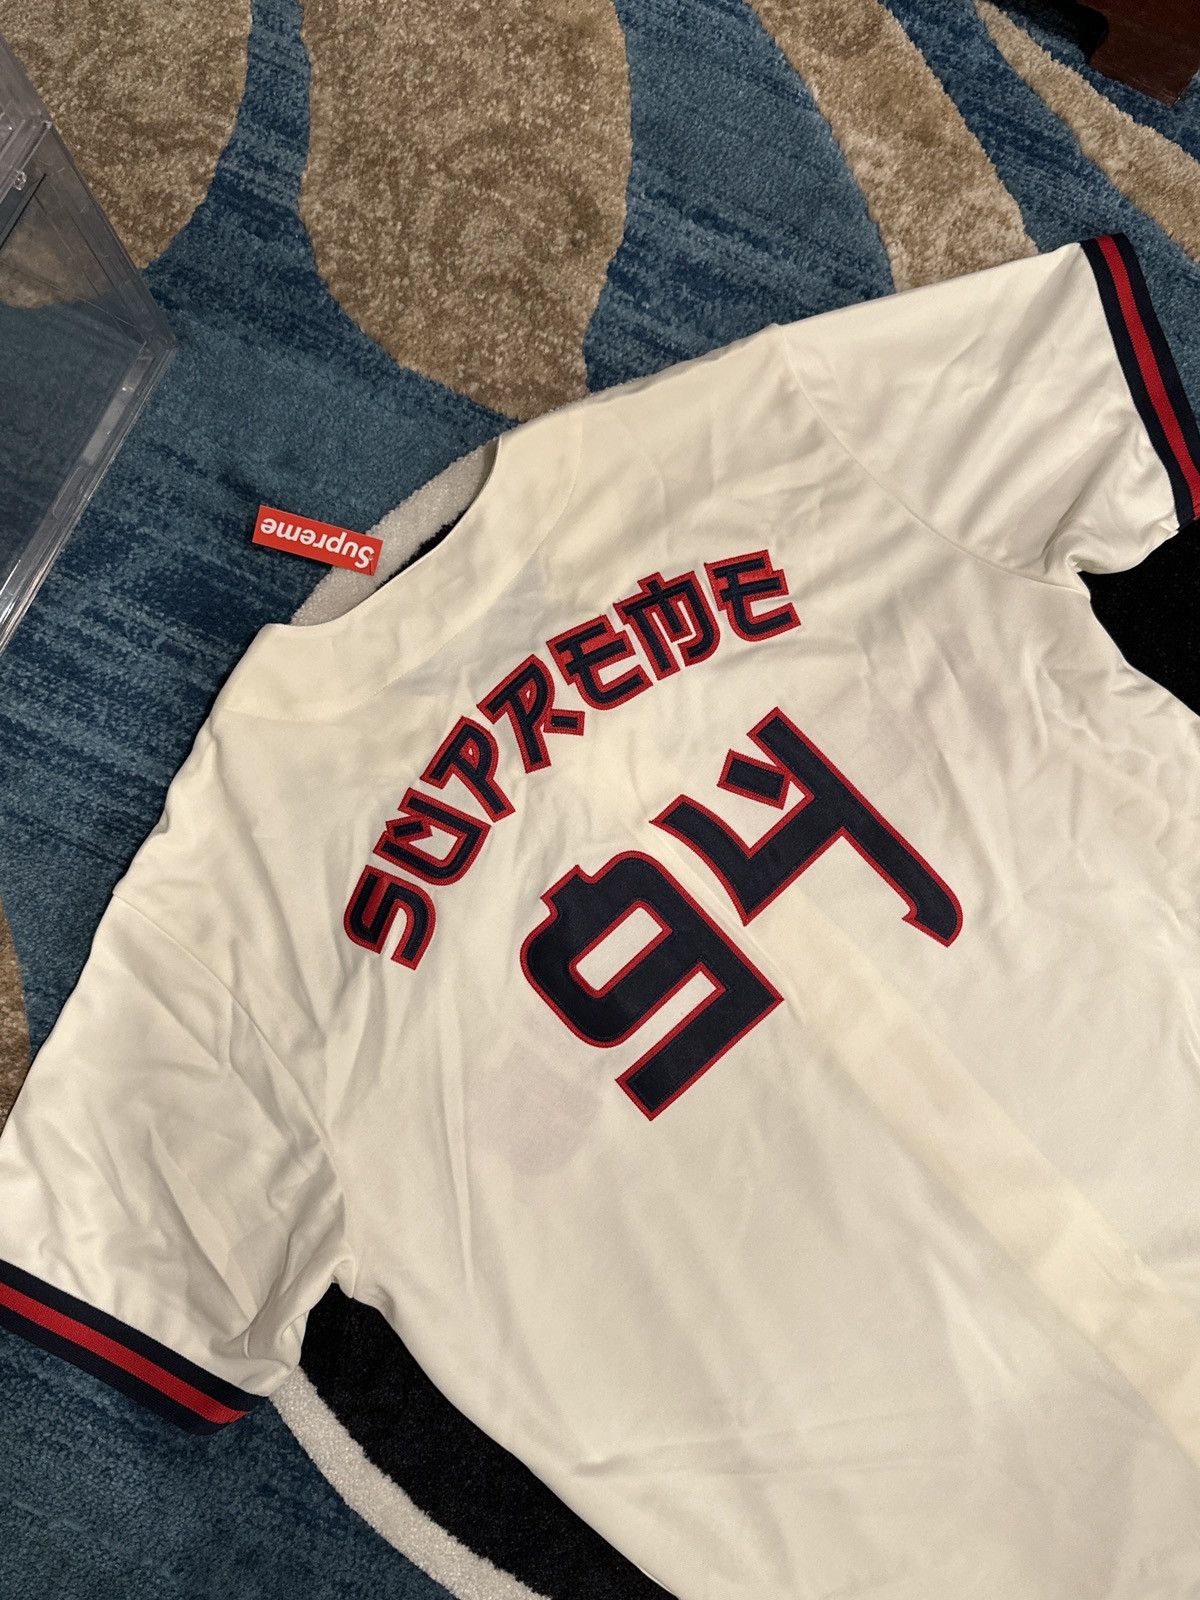 Supreme Supreme Red Rum Baseball Jersey | Grailed